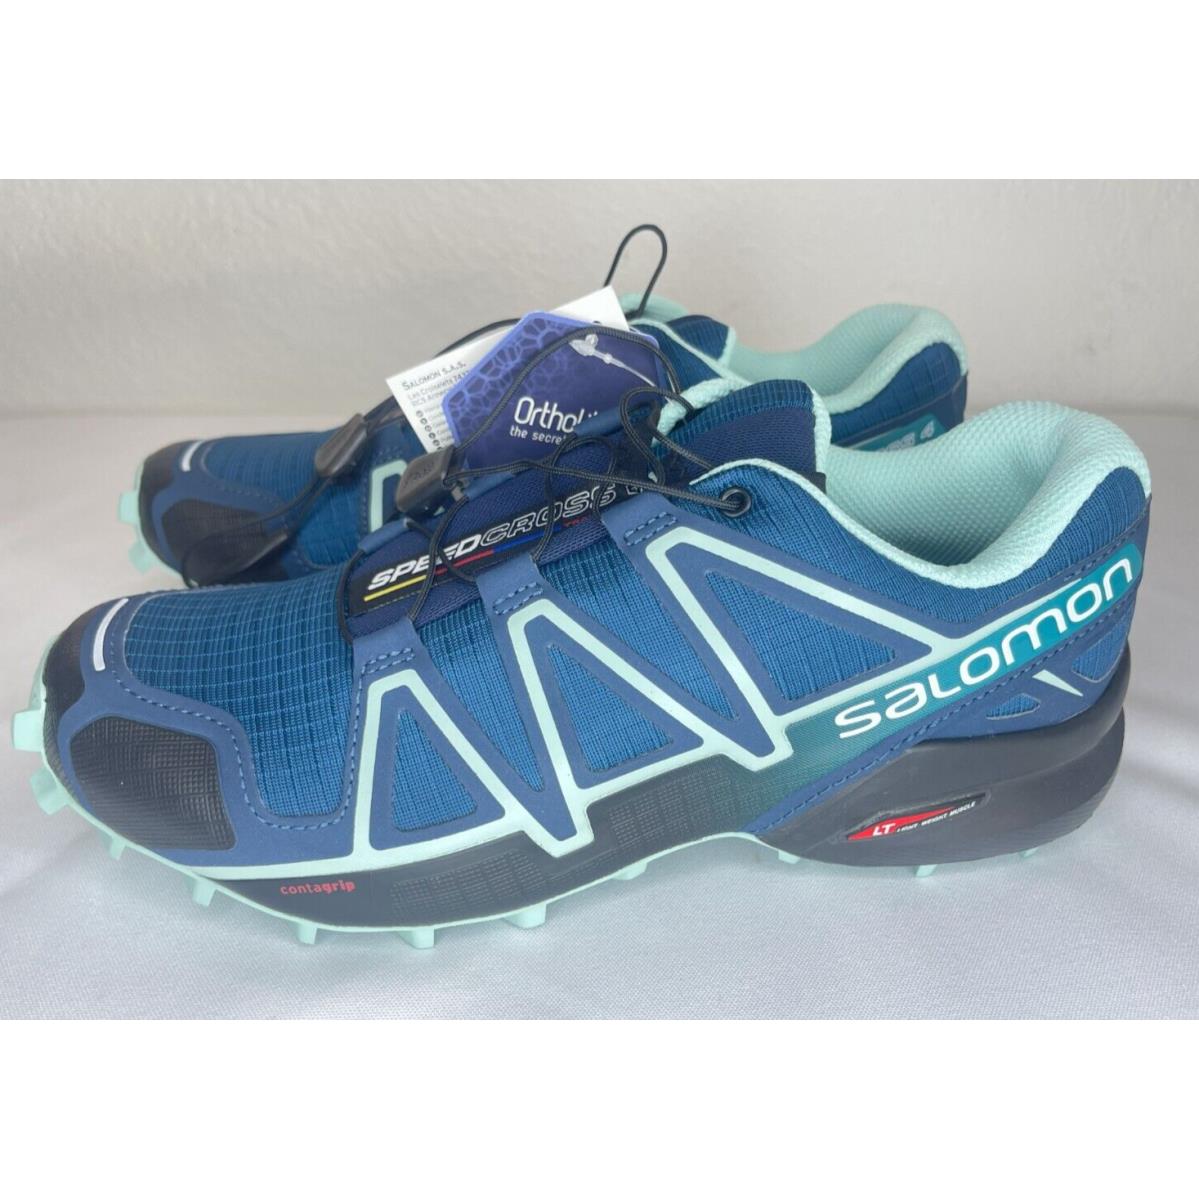 Salomon Women s Speedcross 4 Poseidon Eggshell Blue Trail Running Shoe Size 7.5